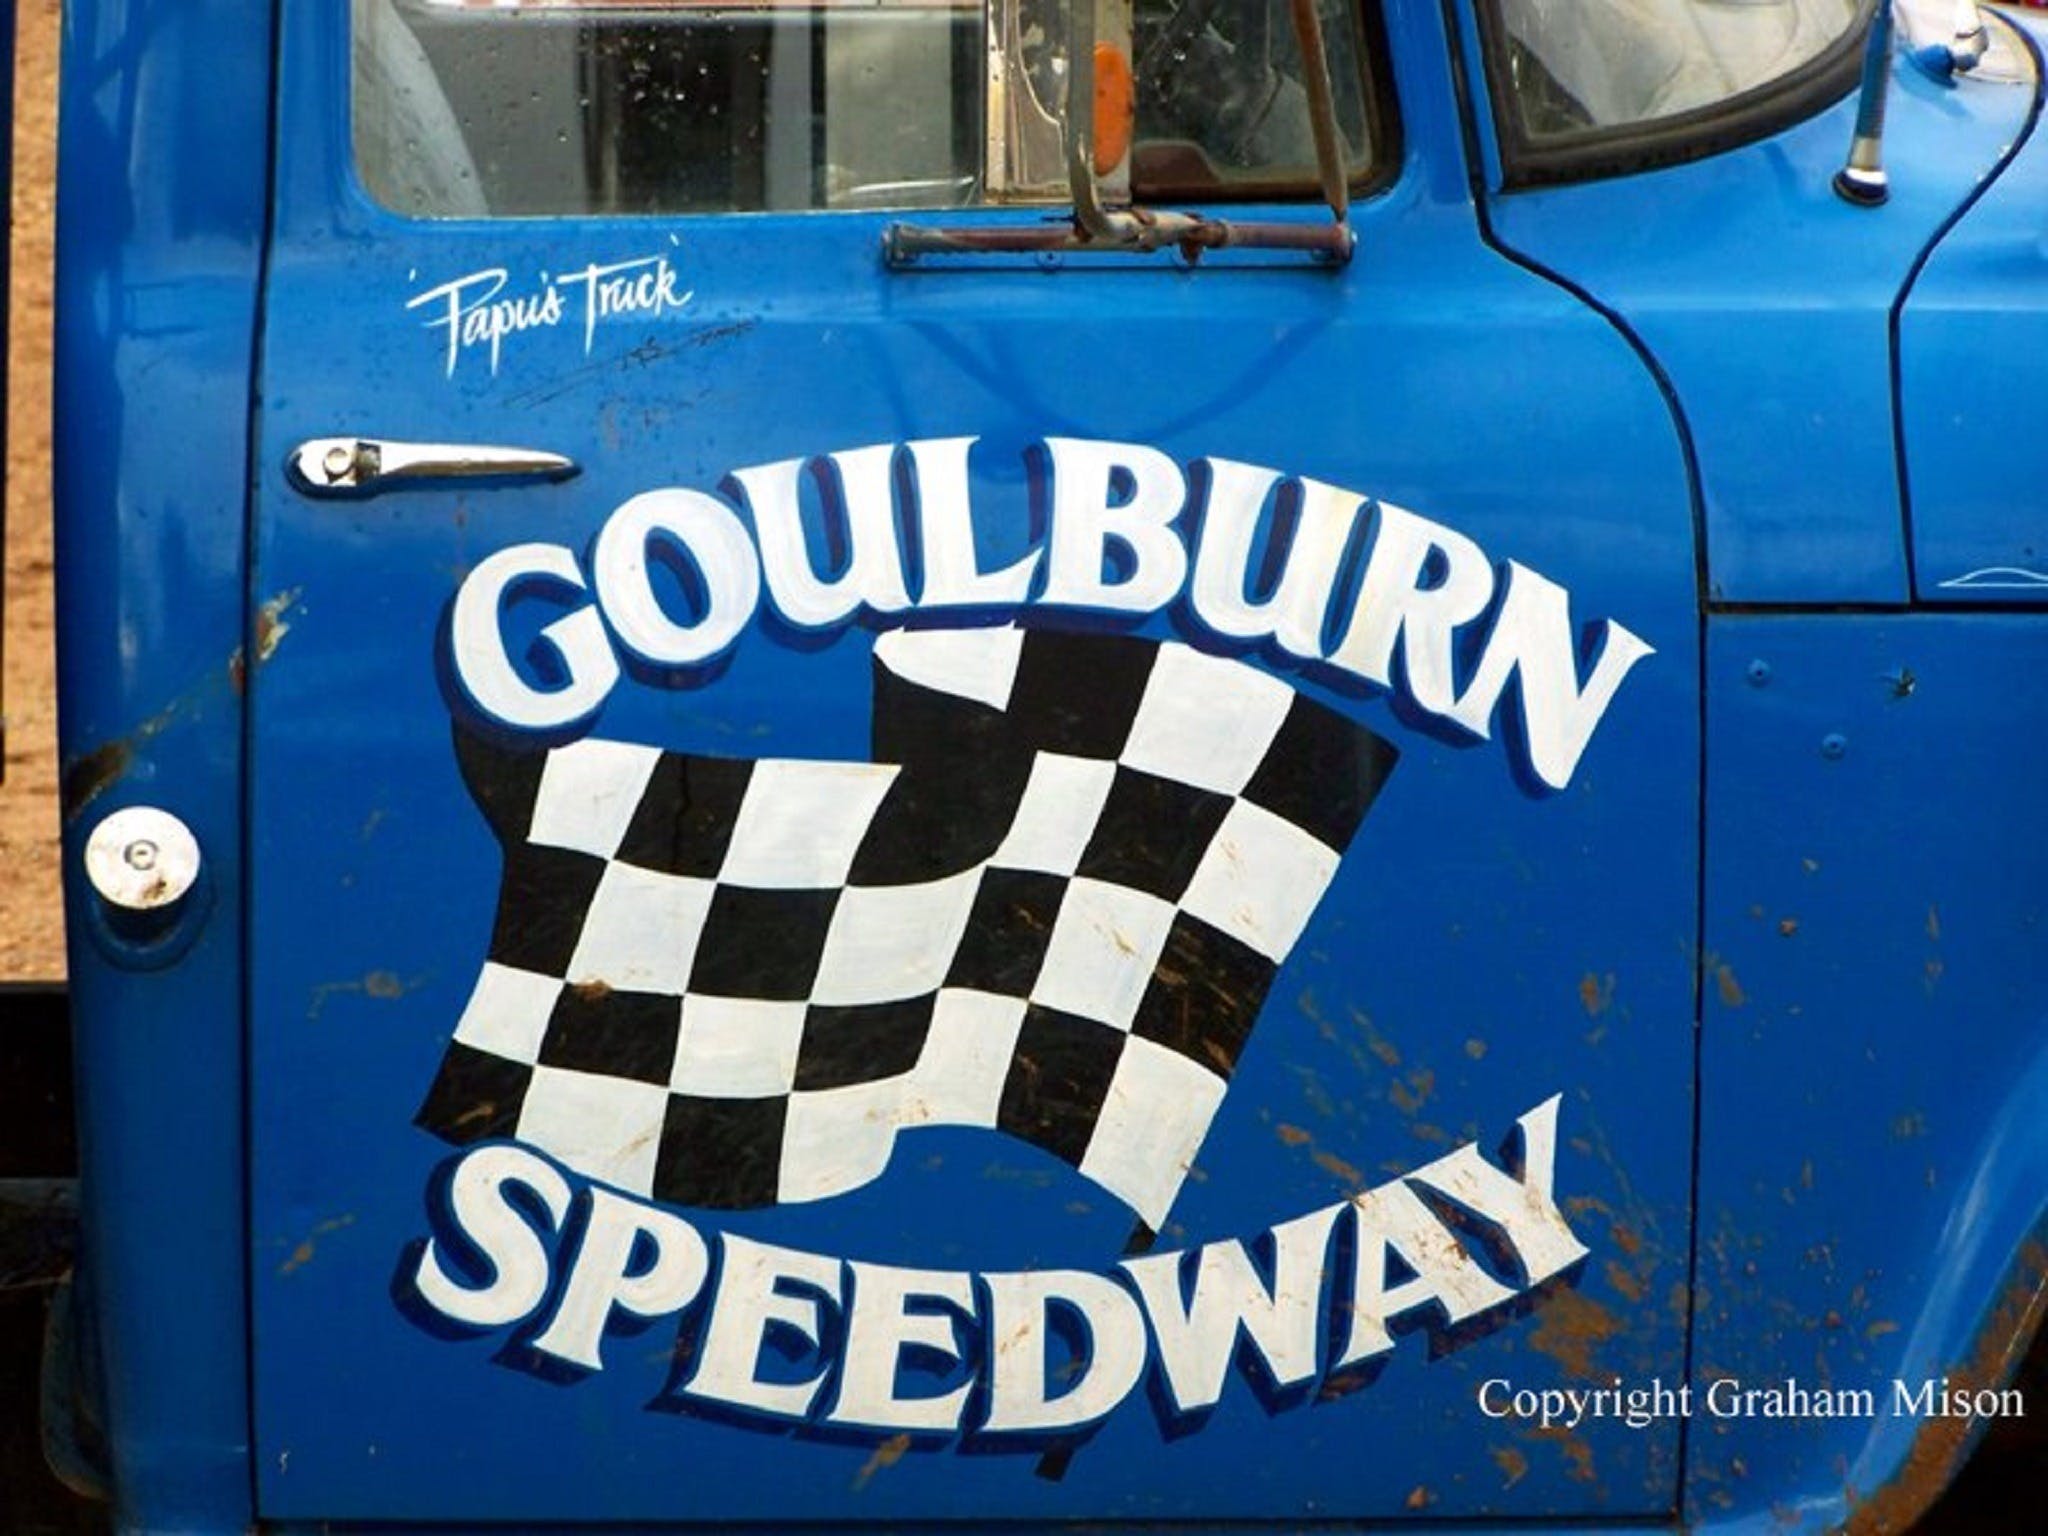 50 years of racing at Goulburn Speedway - Accommodation Kalgoorlie